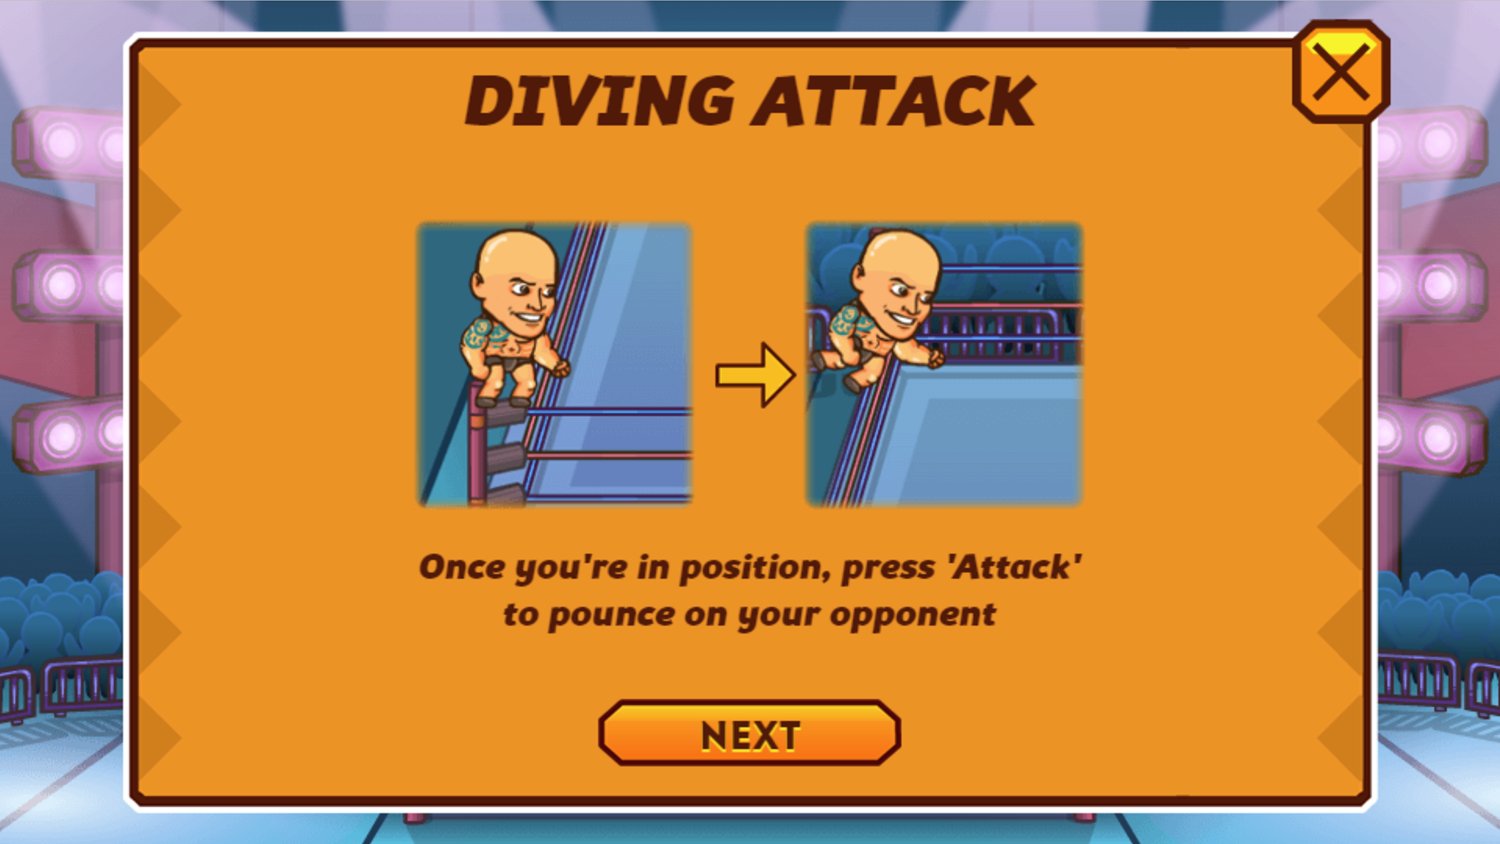 Pro Wrestling Action Game Diving Attack Information Screen Screenshot.